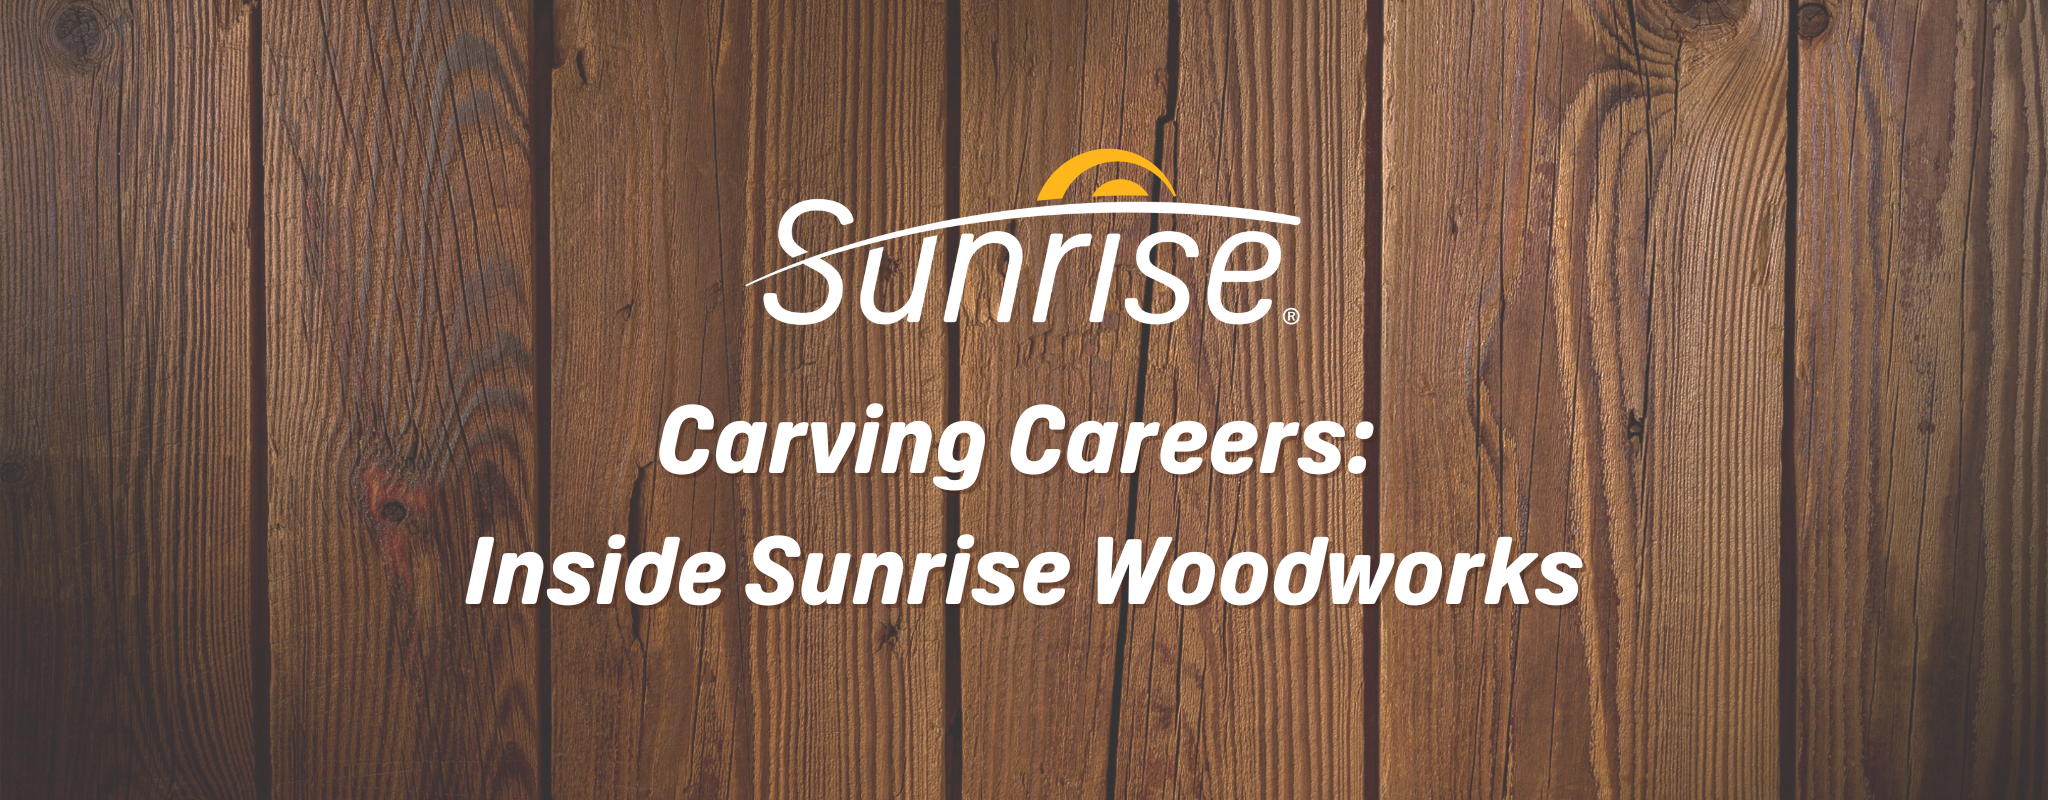 Kariera rzeźbiarska: Inside Sunrise Woodworks